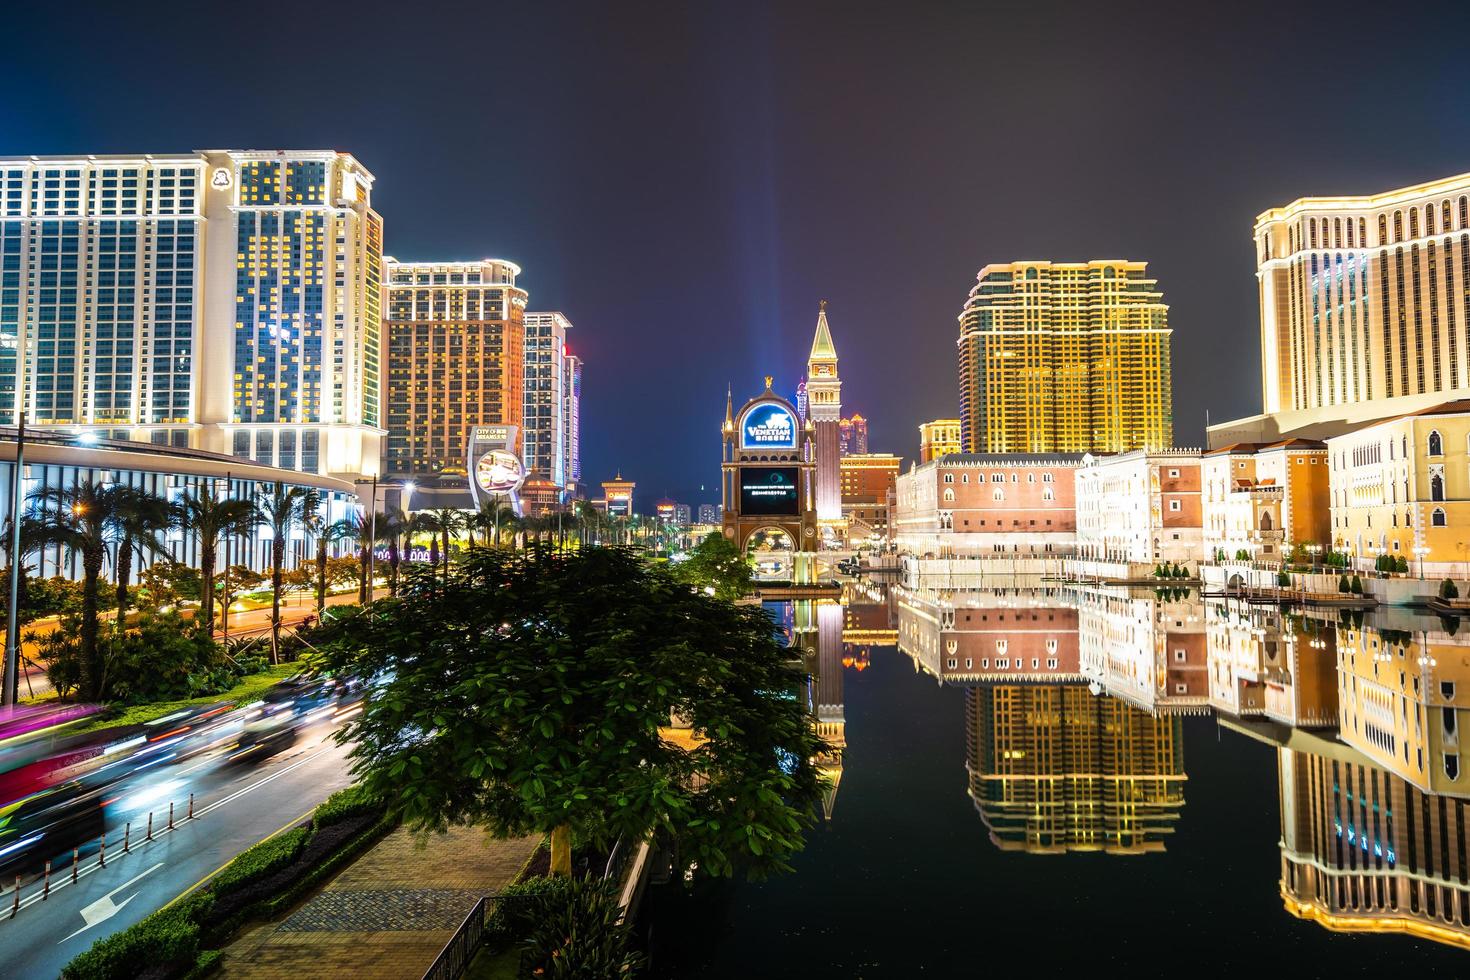 Venetian and other hotel resort and casino in Macau city, China at night photo